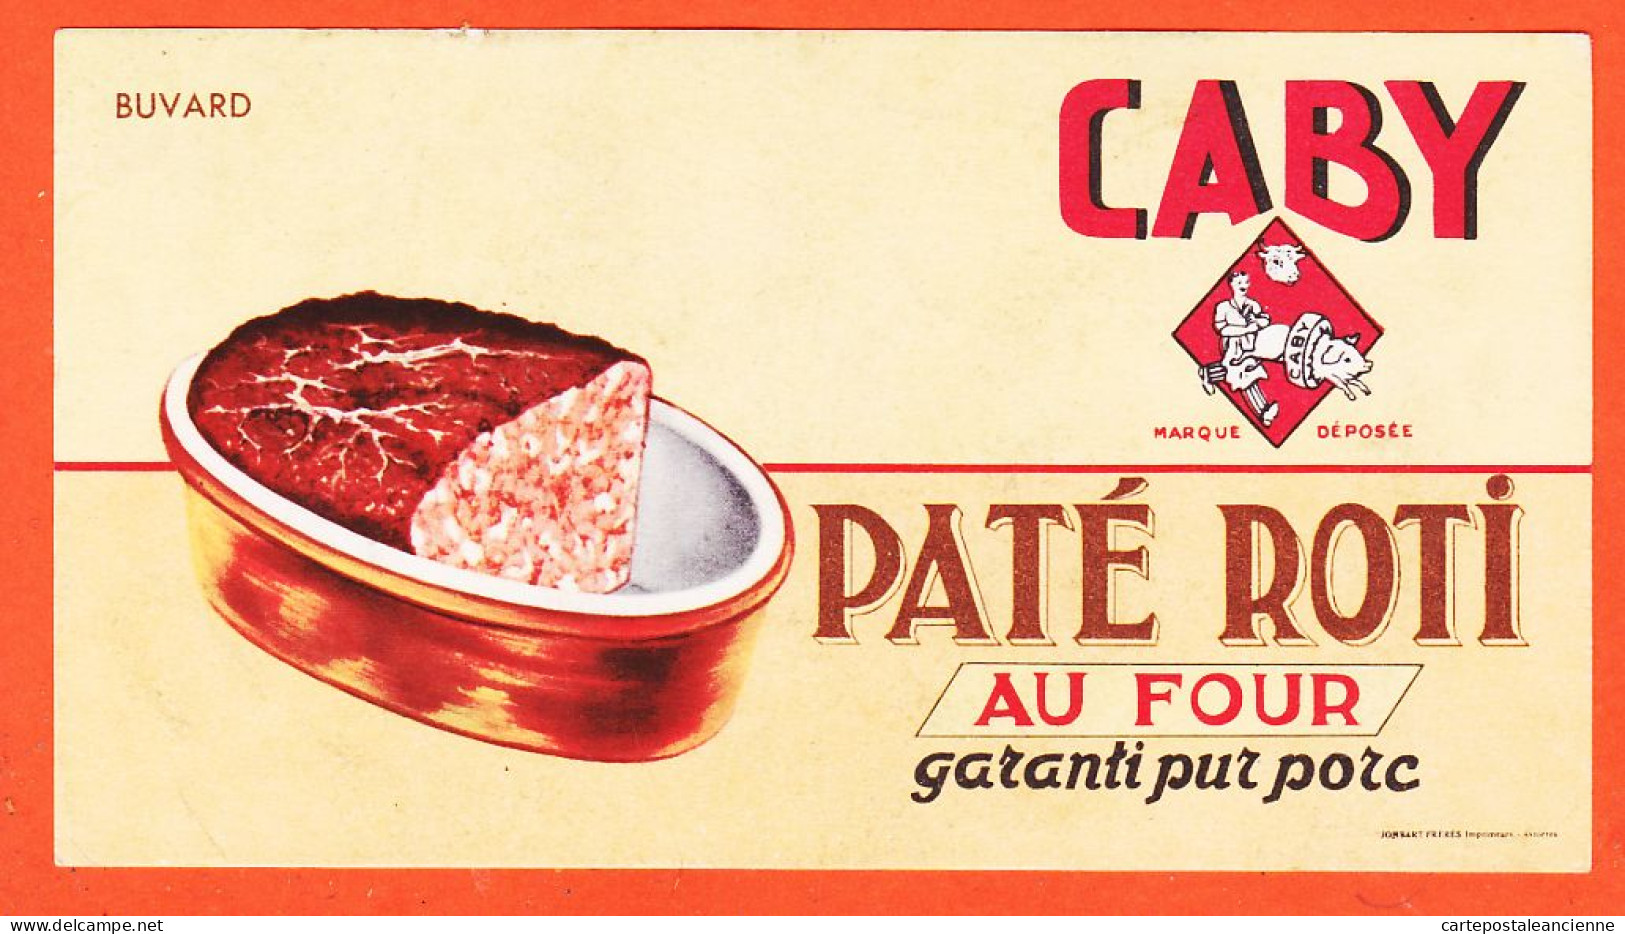 06167 / CABY Paté Roti Four Garanti Pur Porc Imprimeurs JOMBART Frères Asnières Buvard-Blotter - Food